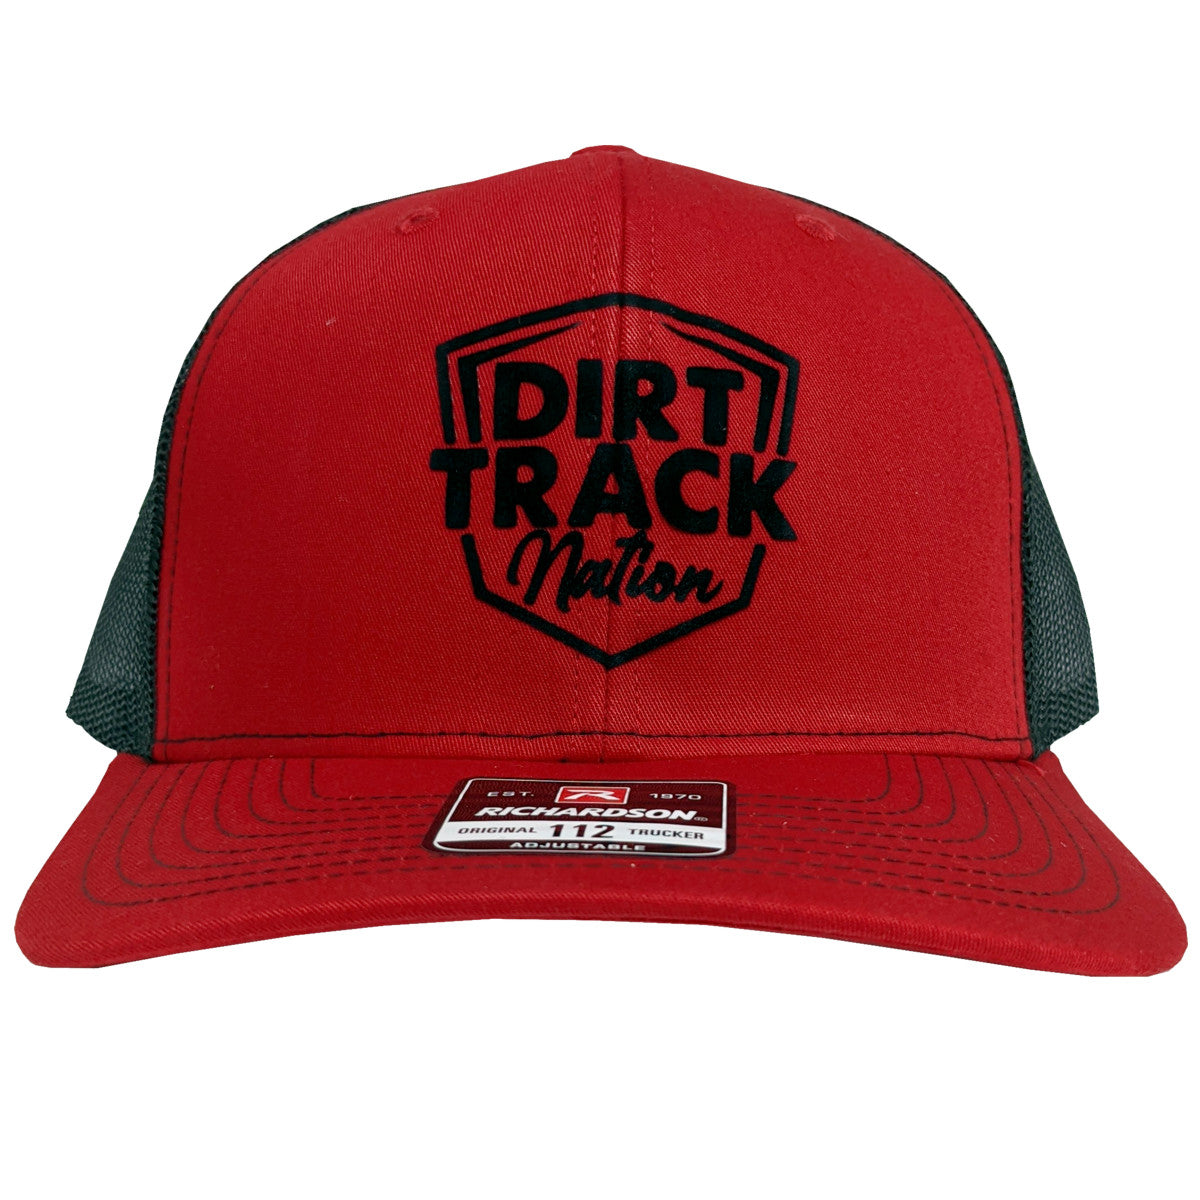 Dirt Track Nation Red w/ Black Mesh Hat